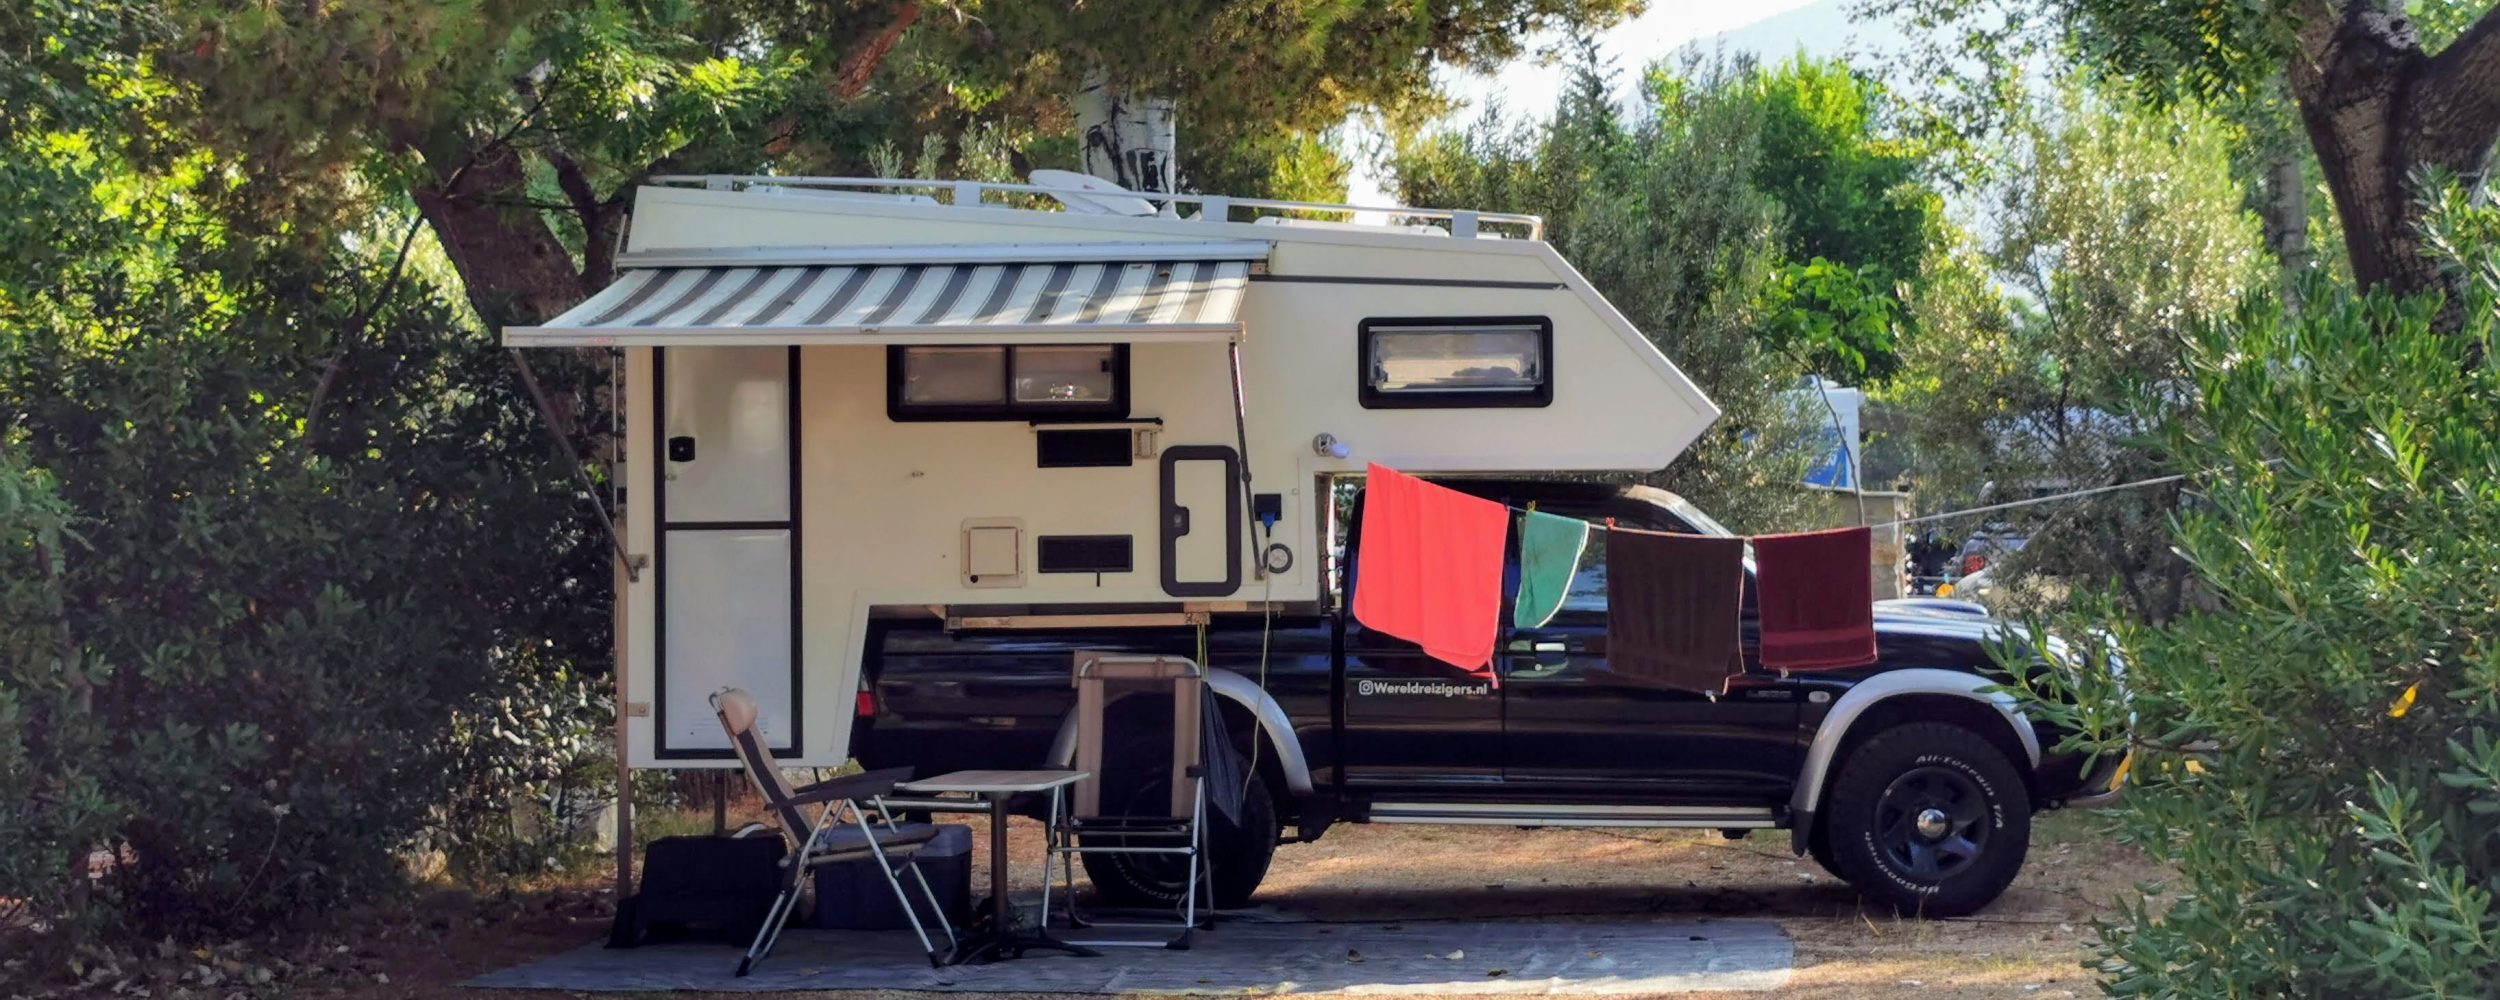 travel with camper or caravan tips